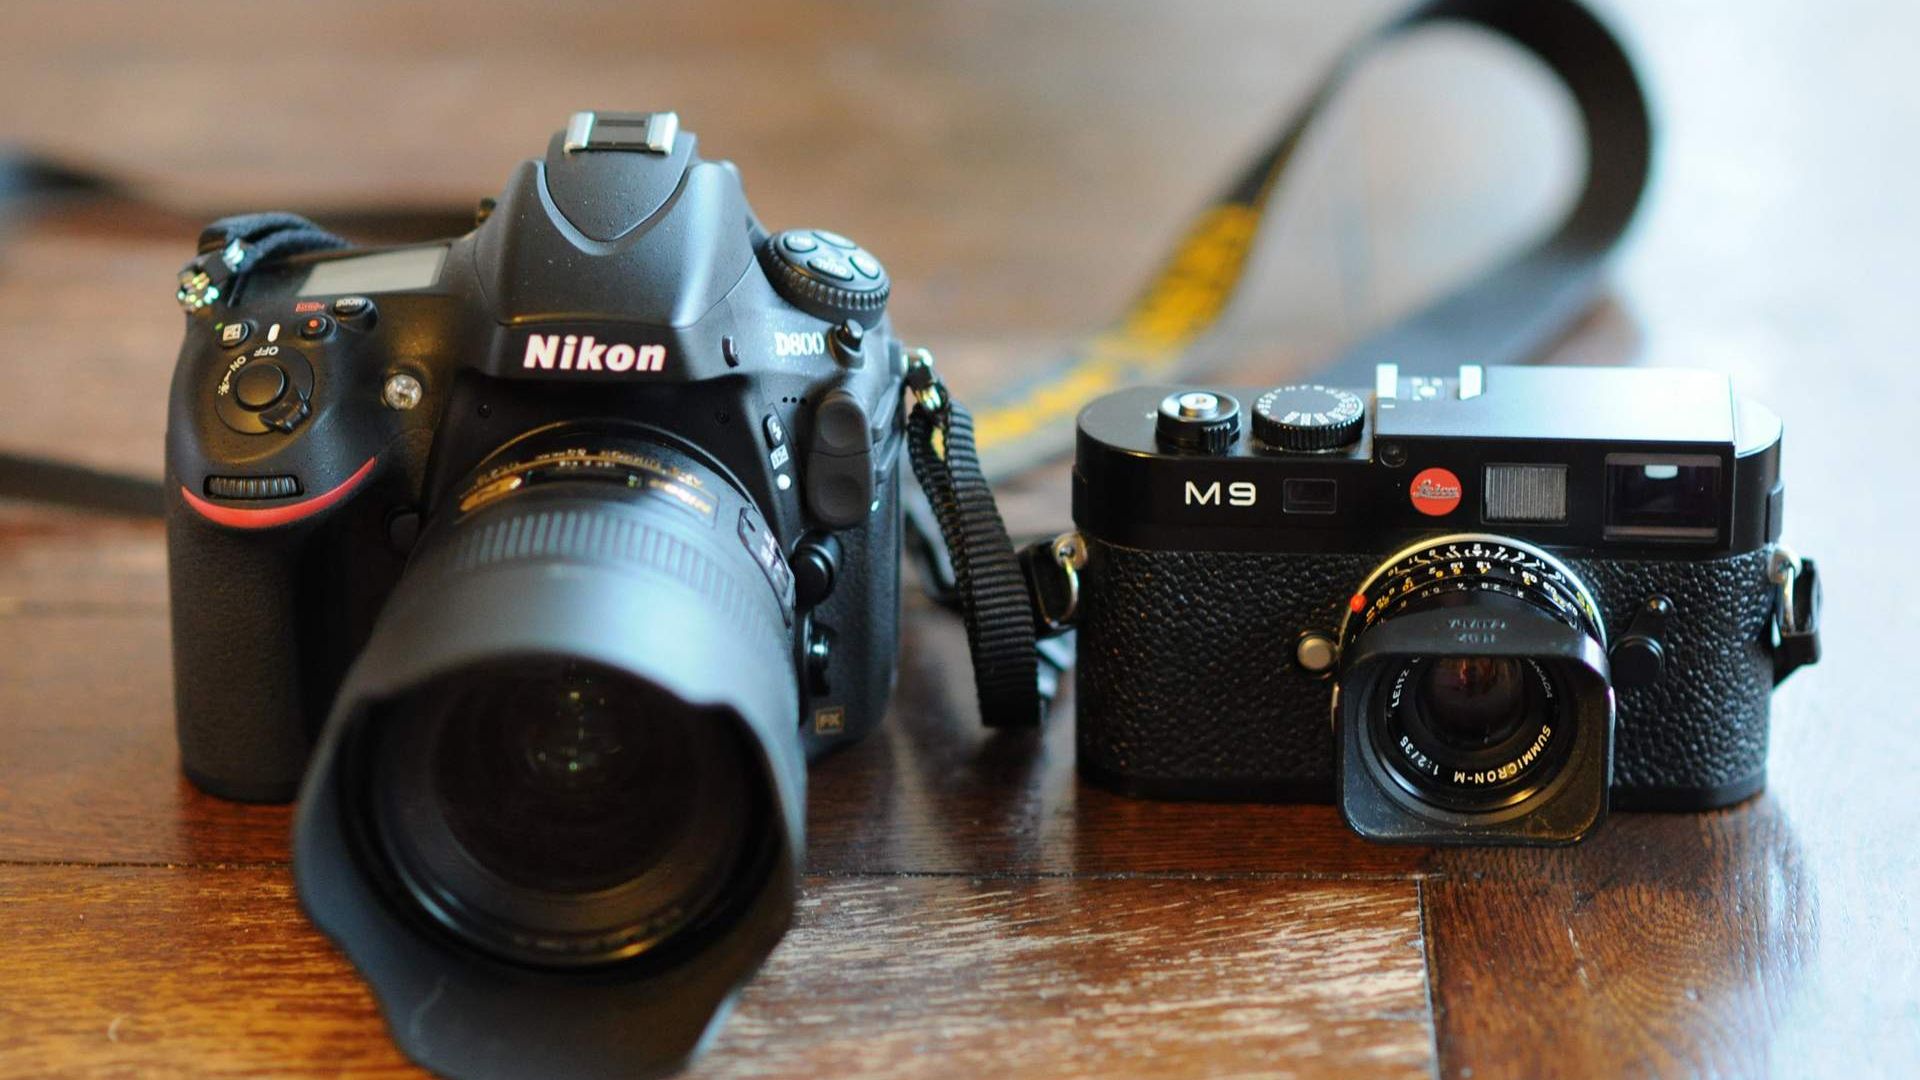 Wallpaper Leica camera and nikon camera